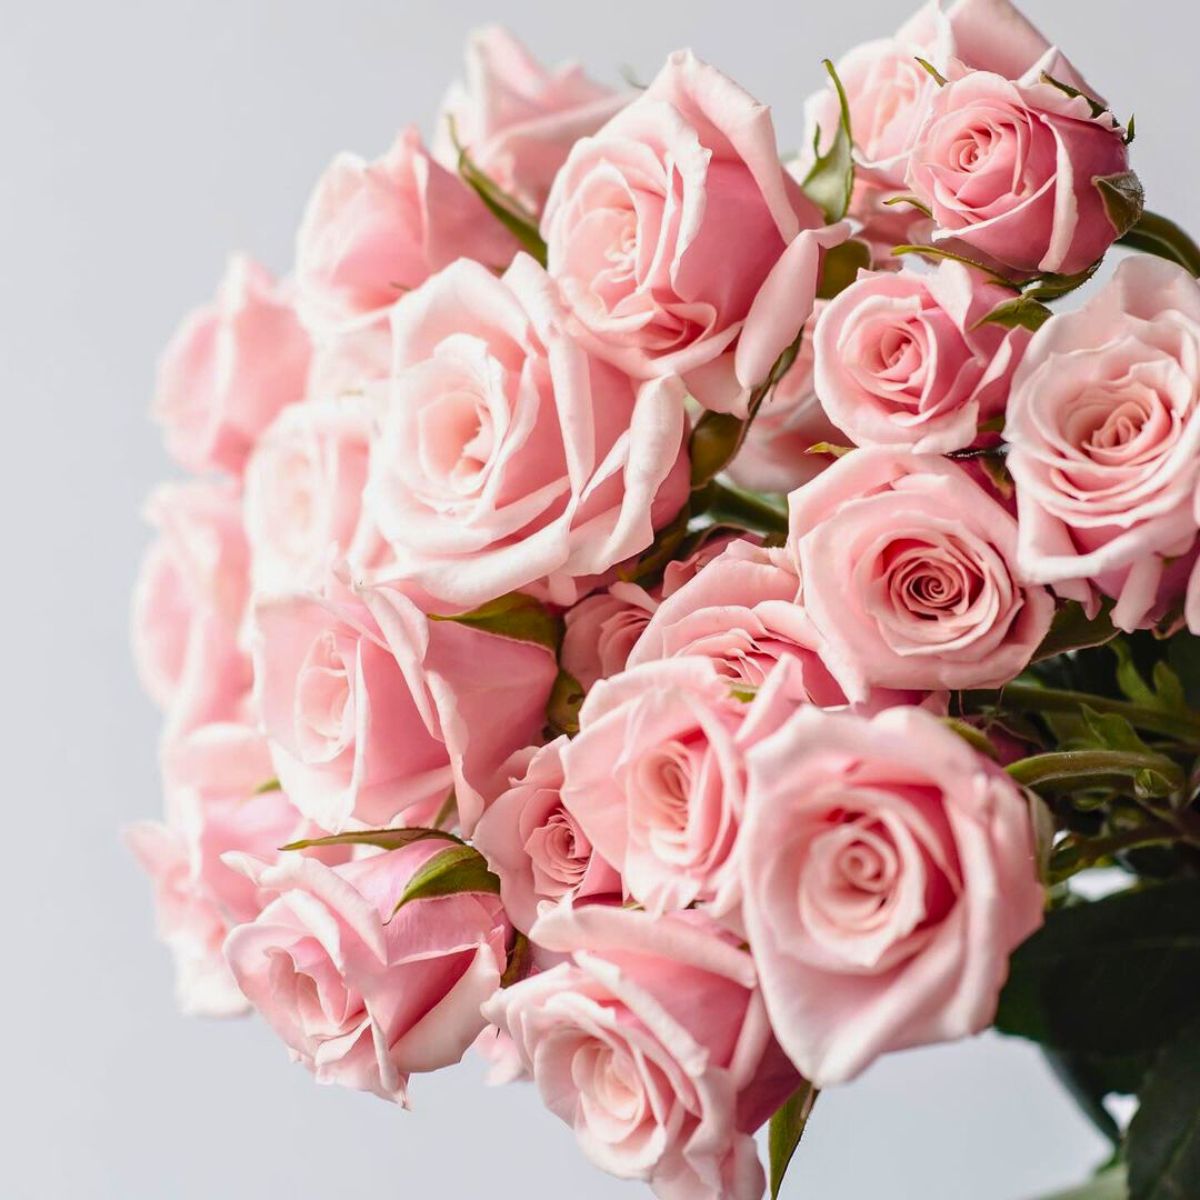 Soft pink roses by Equatoroses